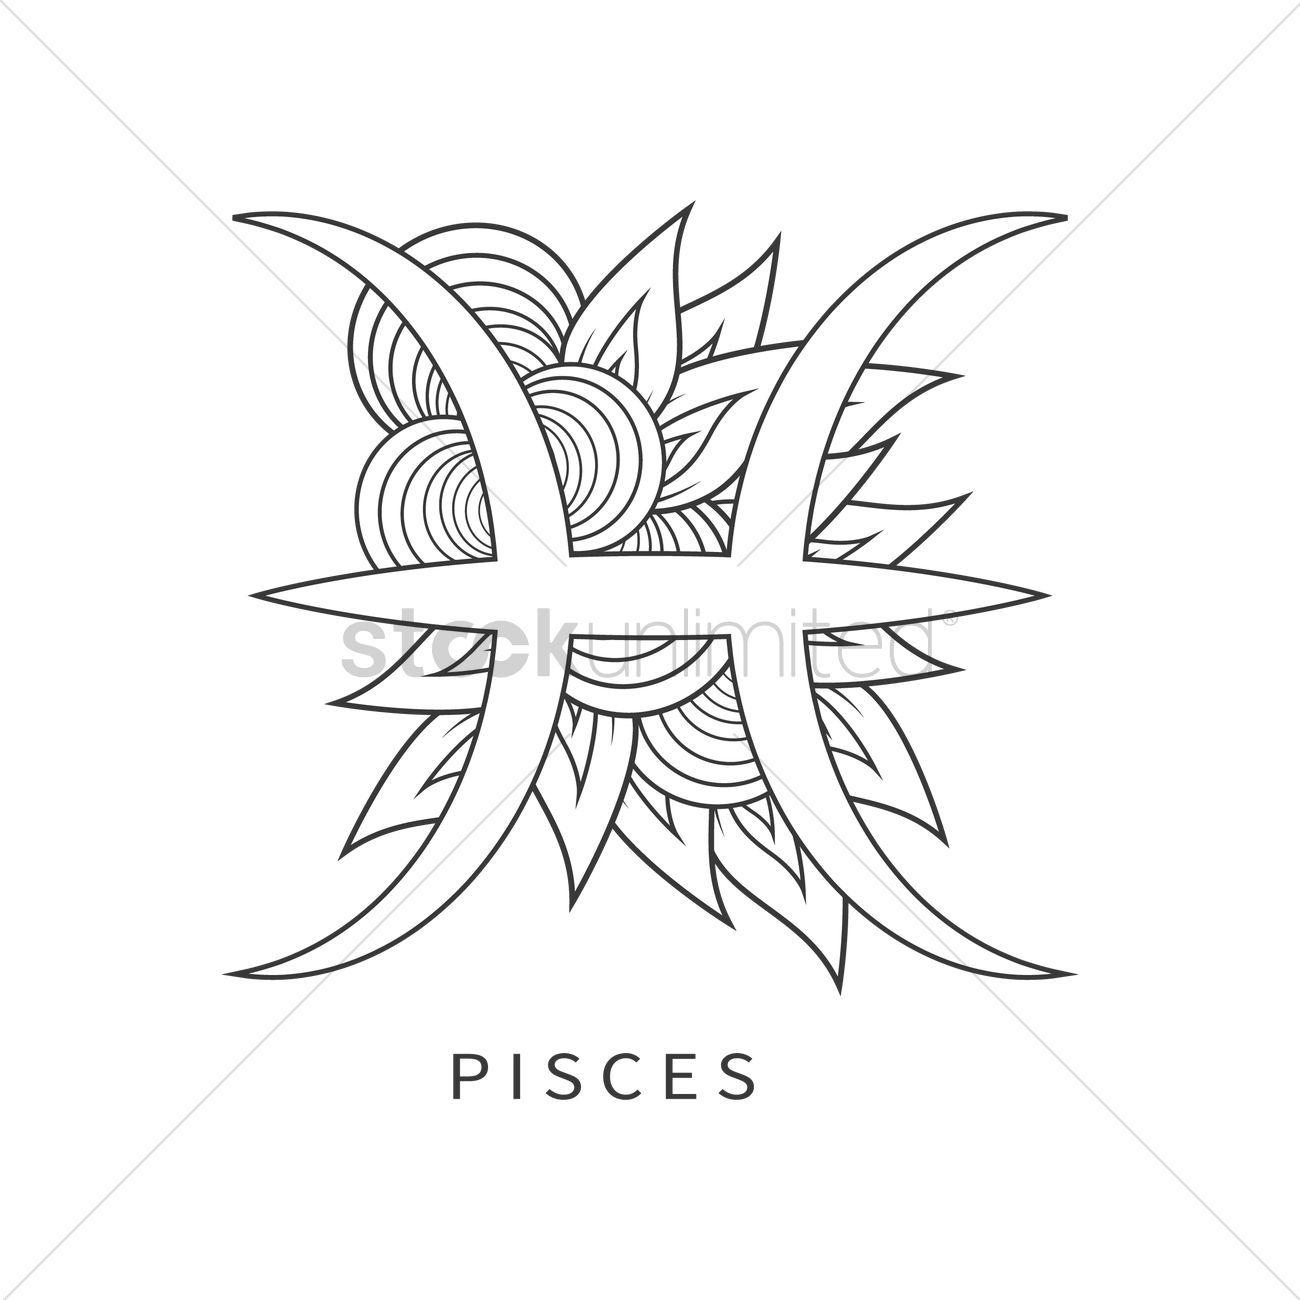 Pisces Logo - Pisces symbol Vector Image